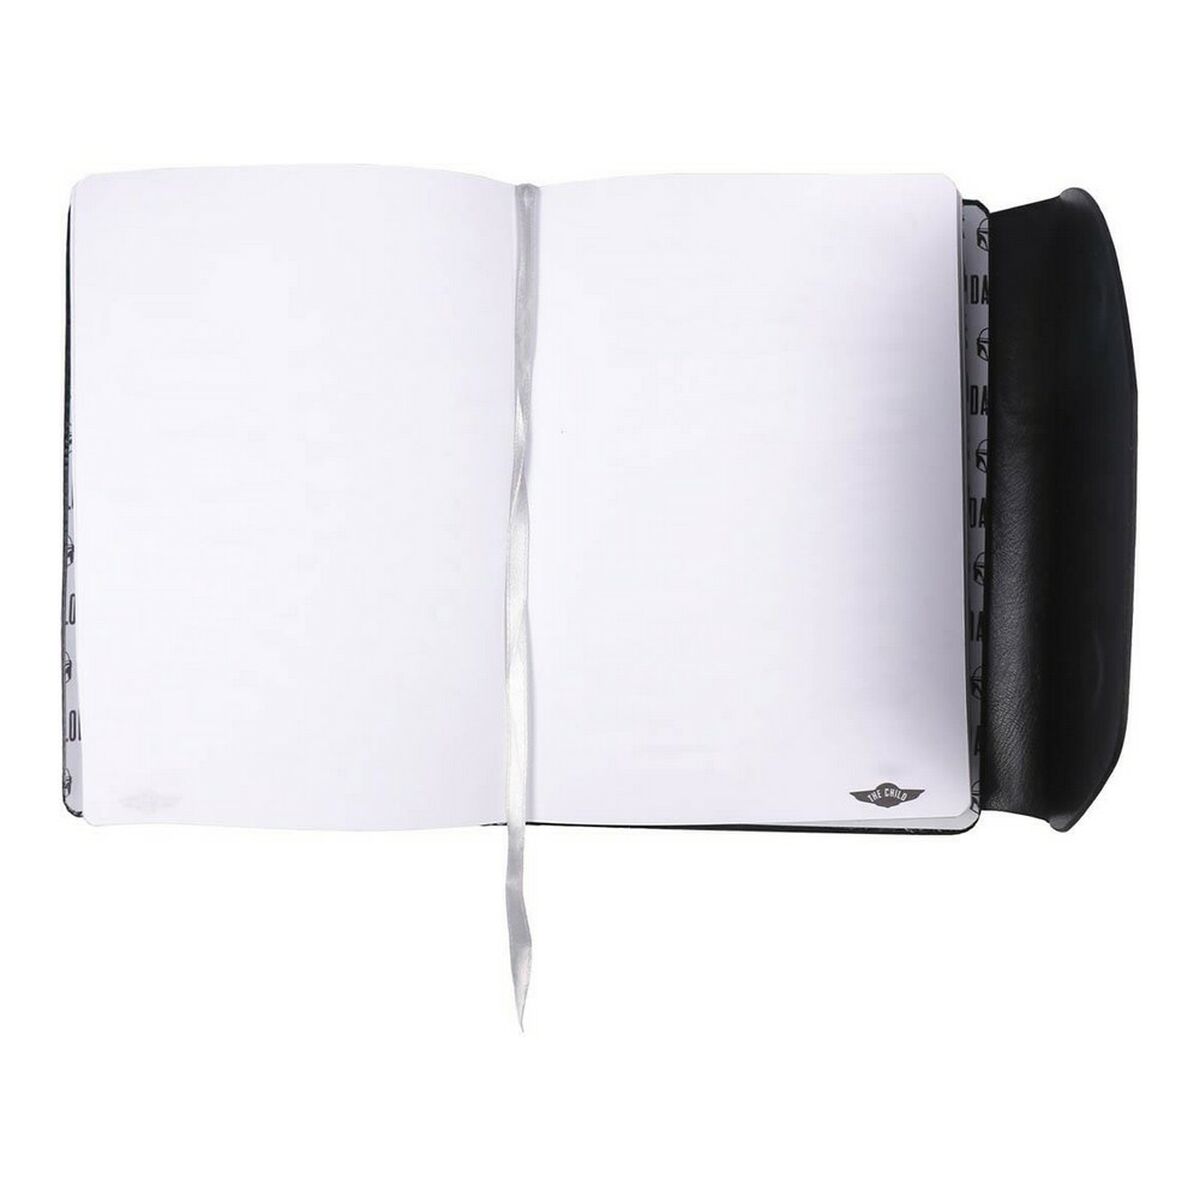 Notebook The Mandalorian Black A5